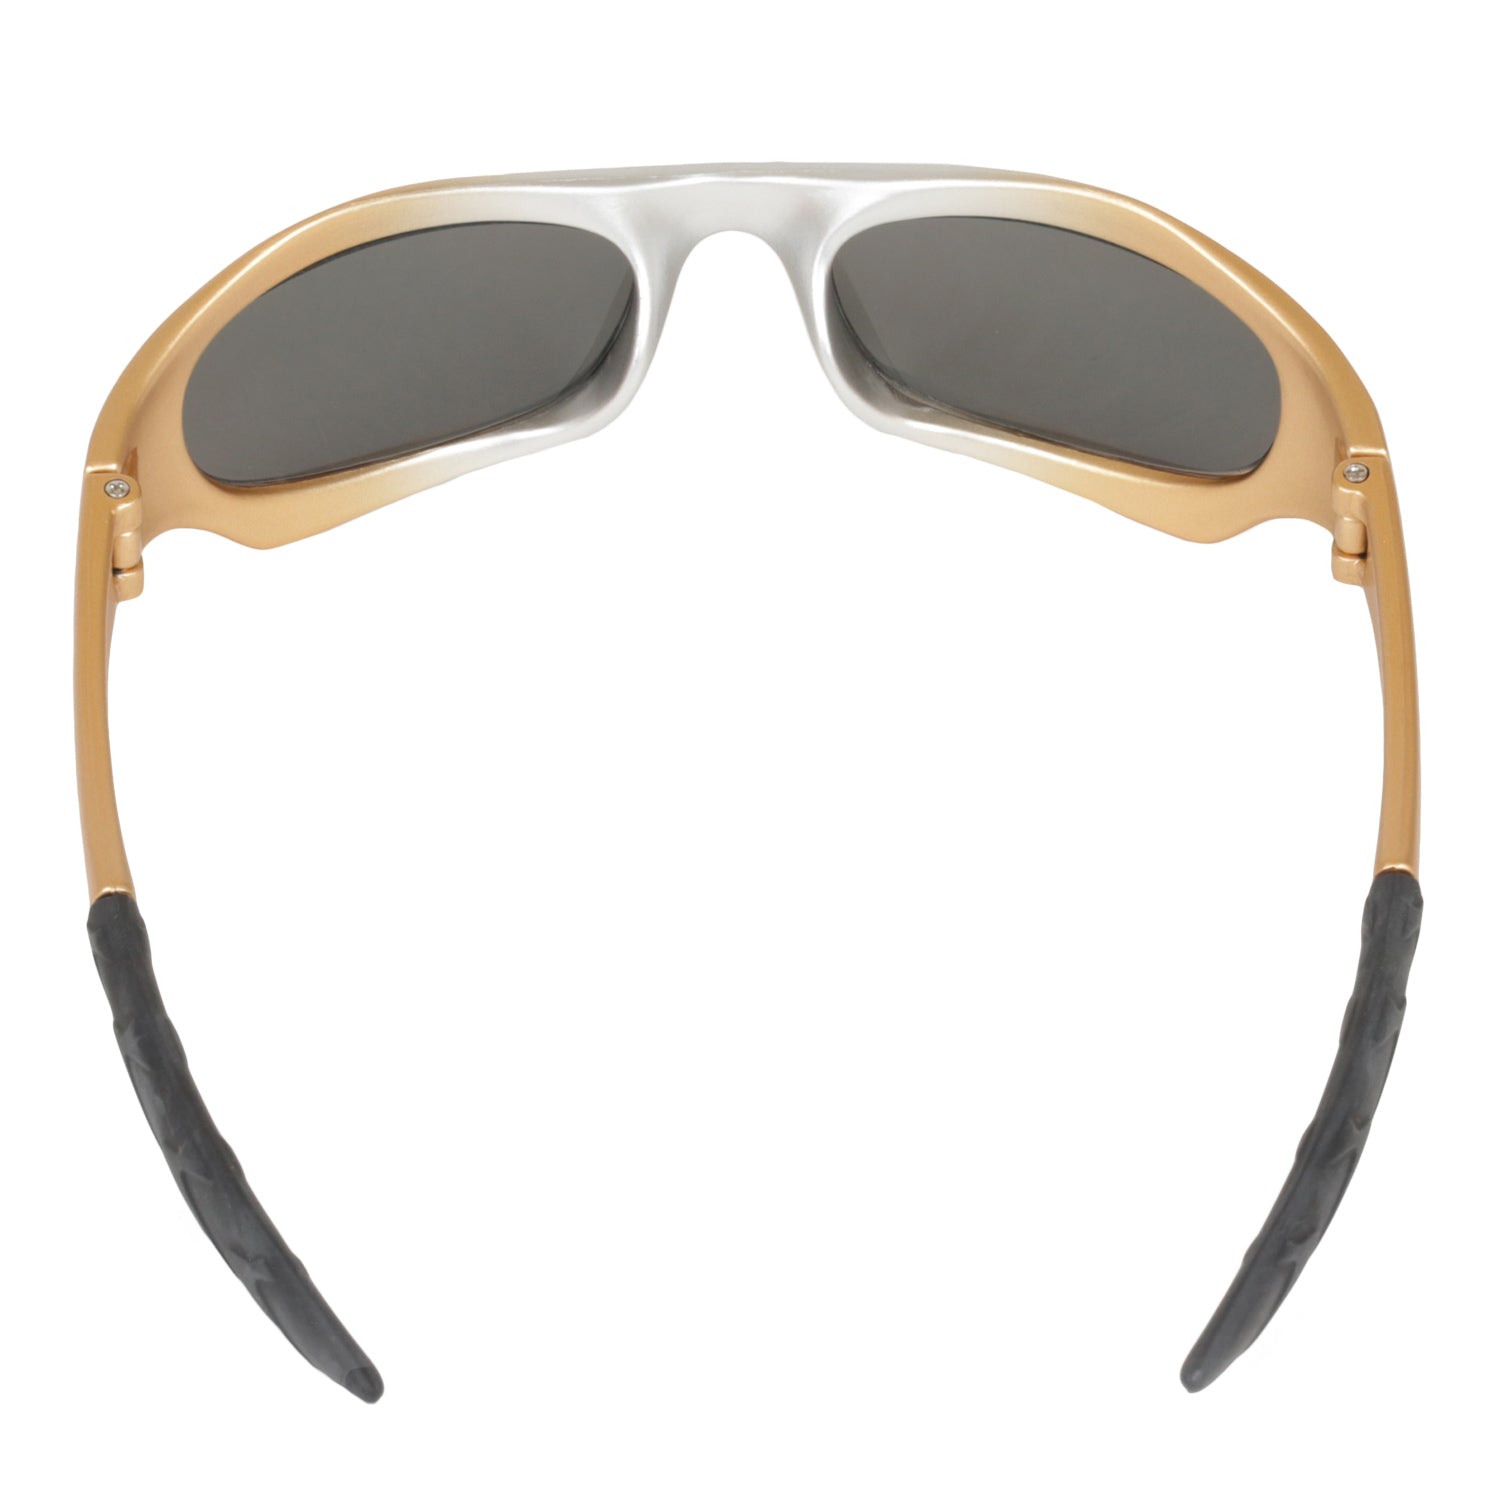 Kool Shades - Sunglasses for Kids